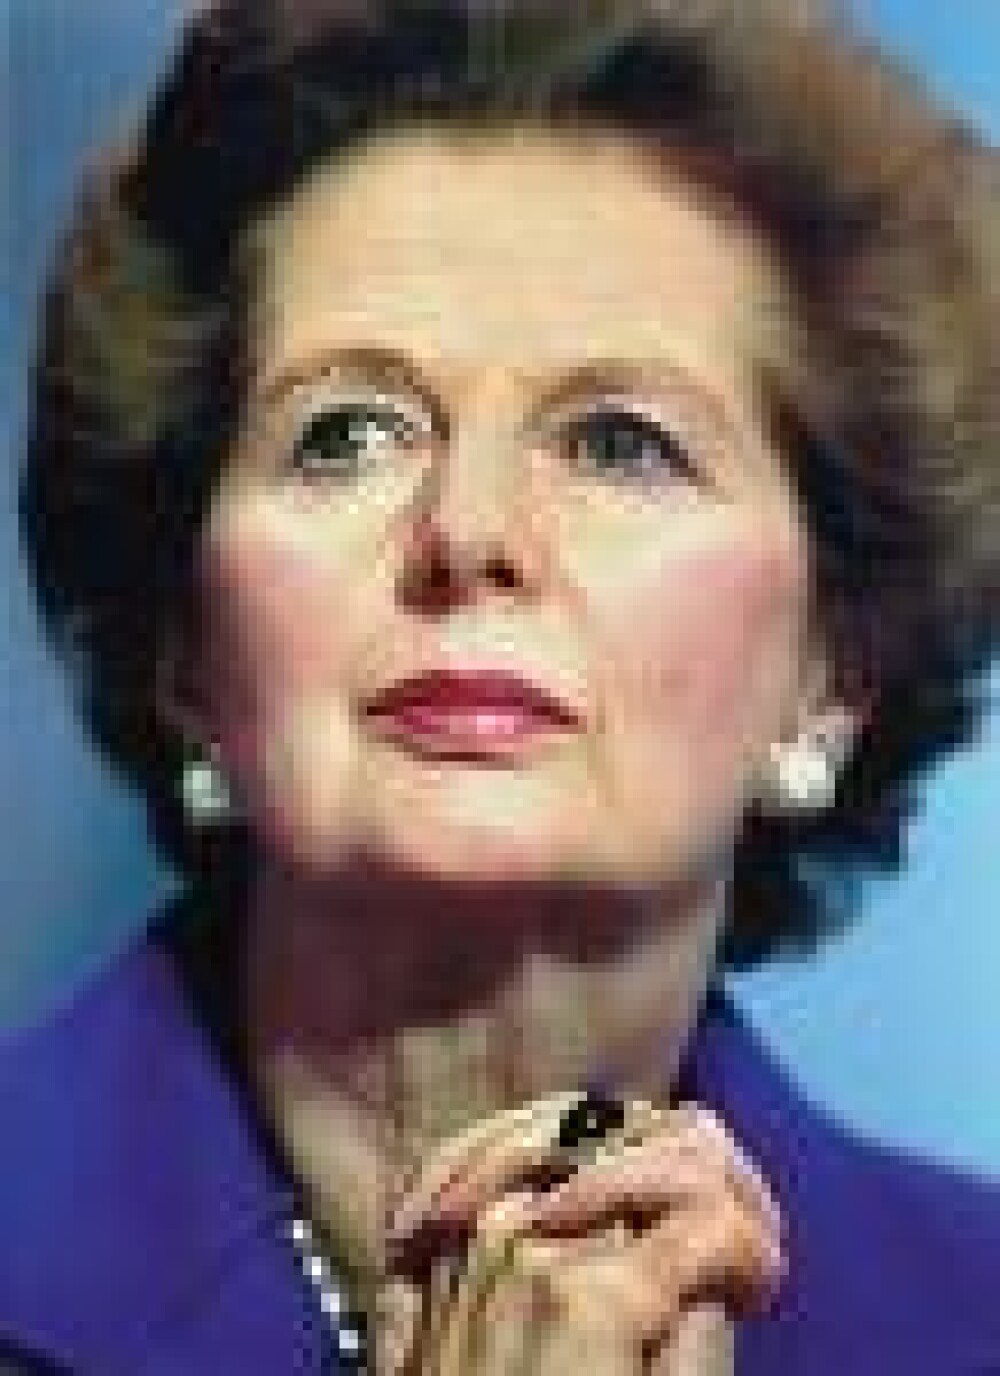 Margaret Thatcher a murit dupa un atac cerebral. 